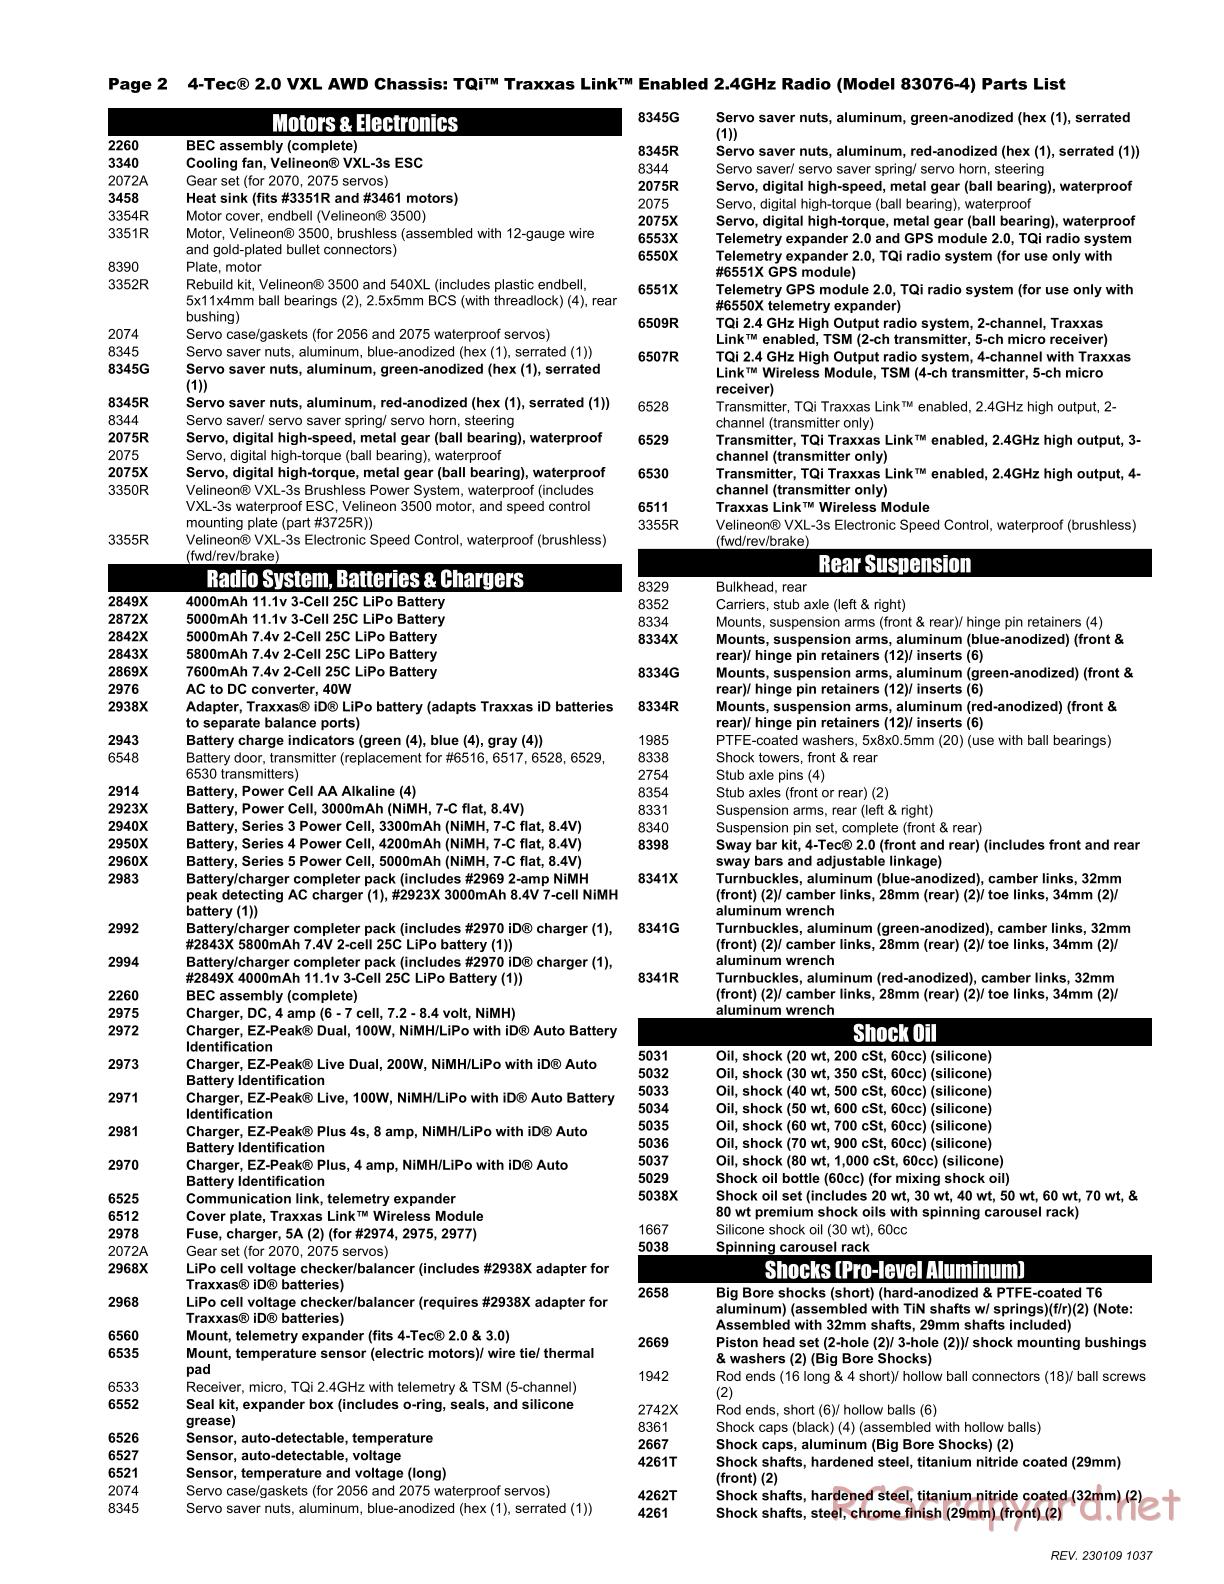 Traxxas - 4-Tec 2.0 VXL (2017) - Parts List - Page 2